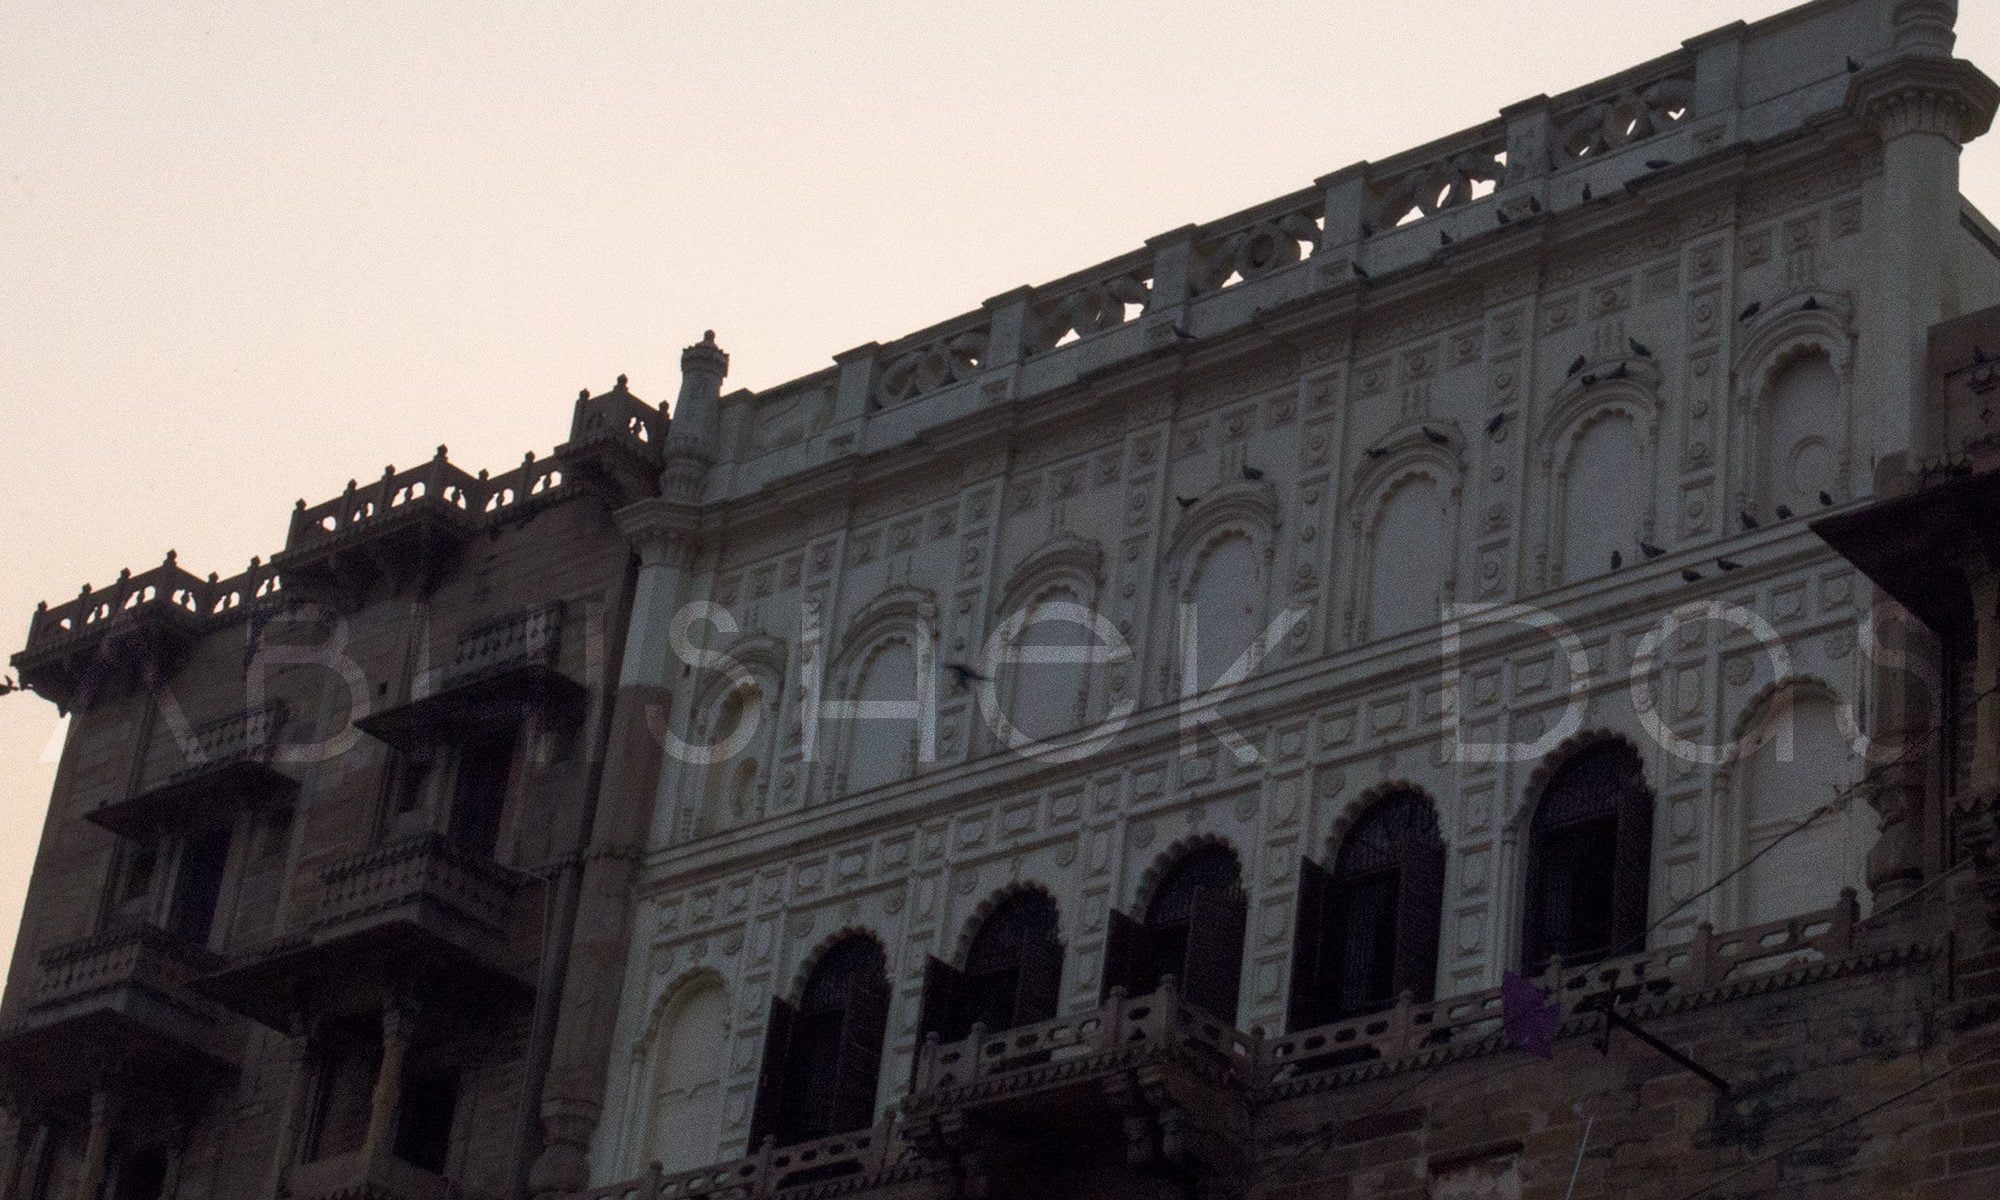 Manmandir Ghat- Ambrosial Ghats of the 'Spiritual' Capital of India- Varanasi